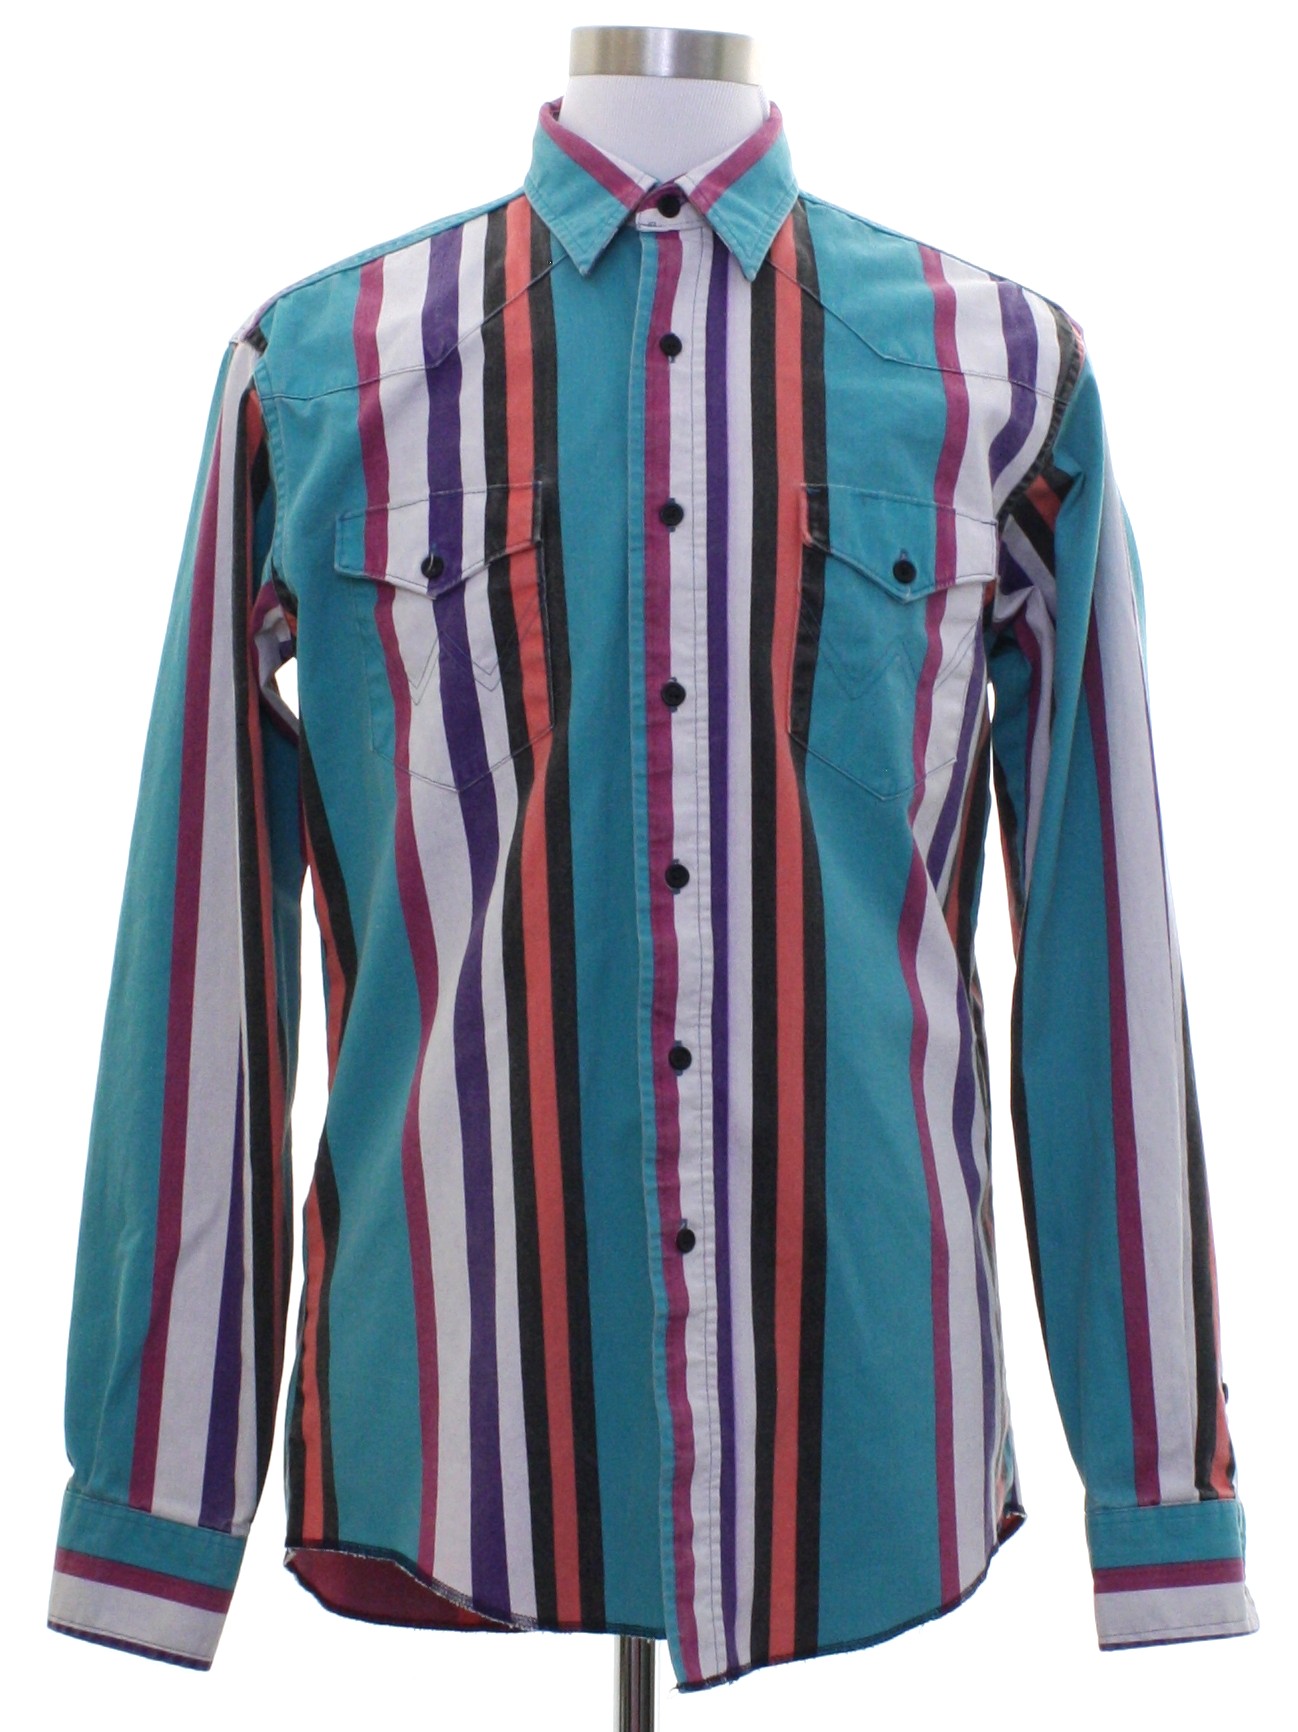 80s Weastern stripe shirt